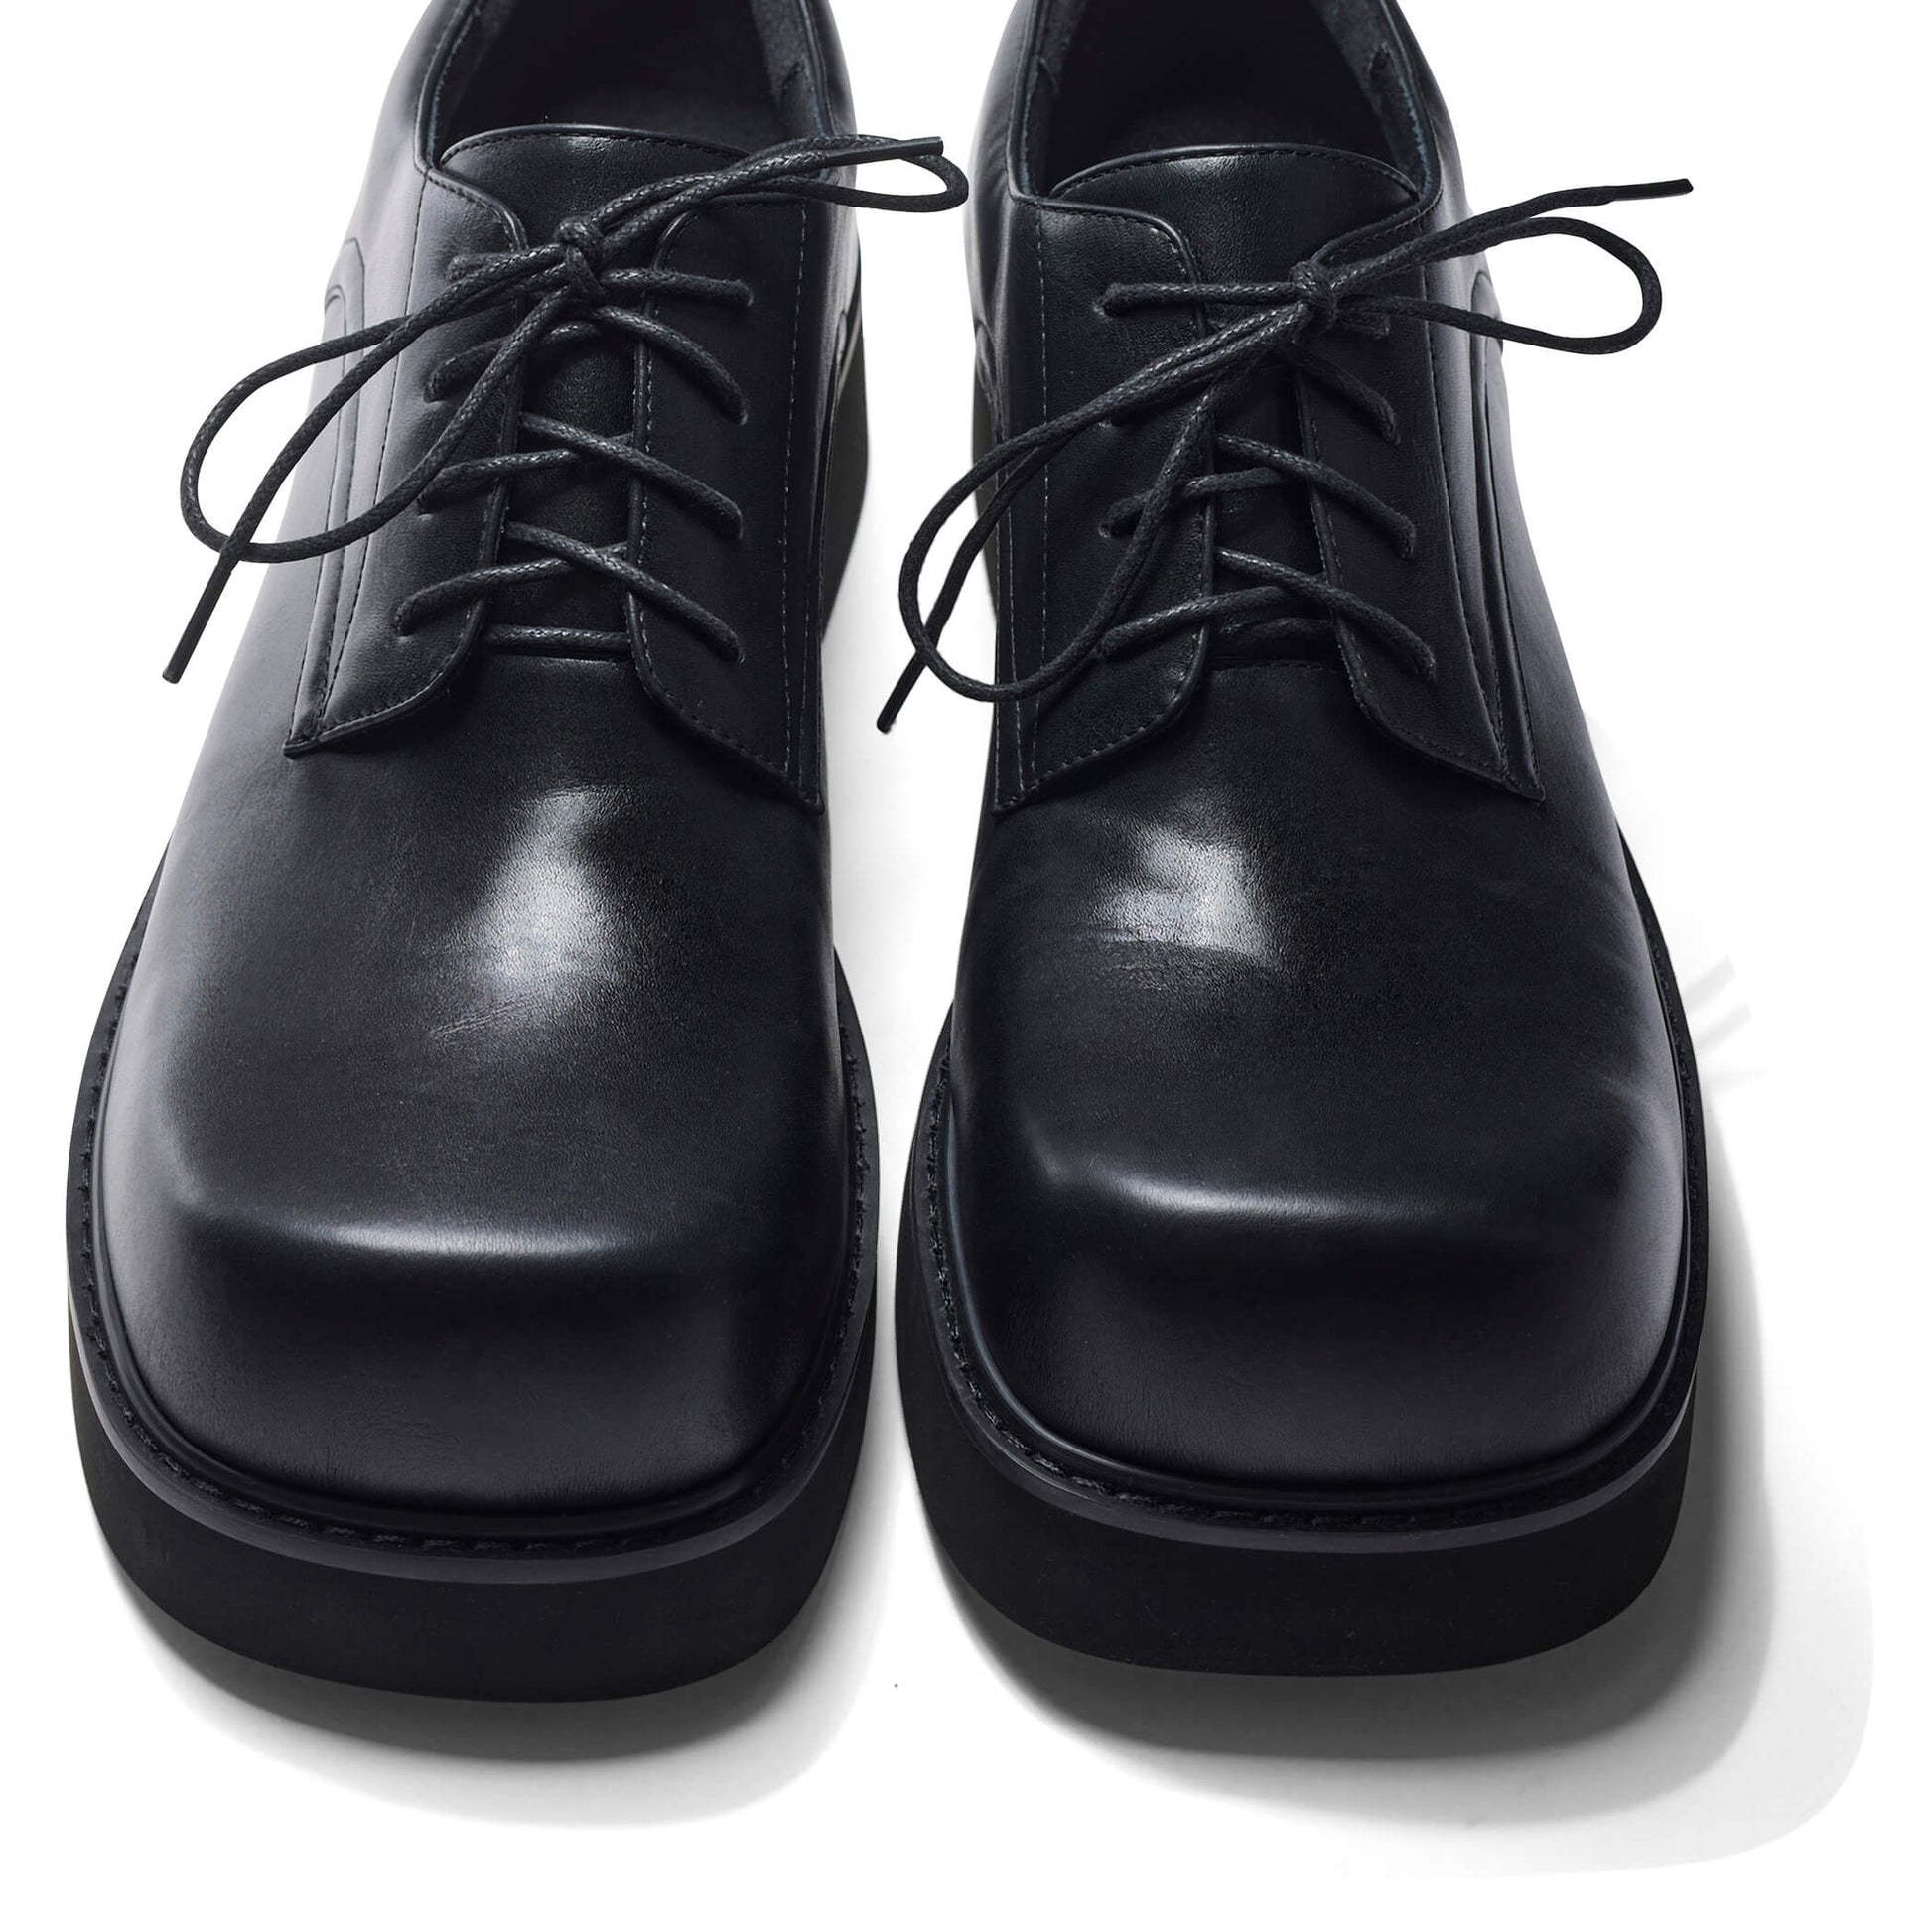 400% Oversized Men's Derby Shoes - Black - Koi Footwear - Front View